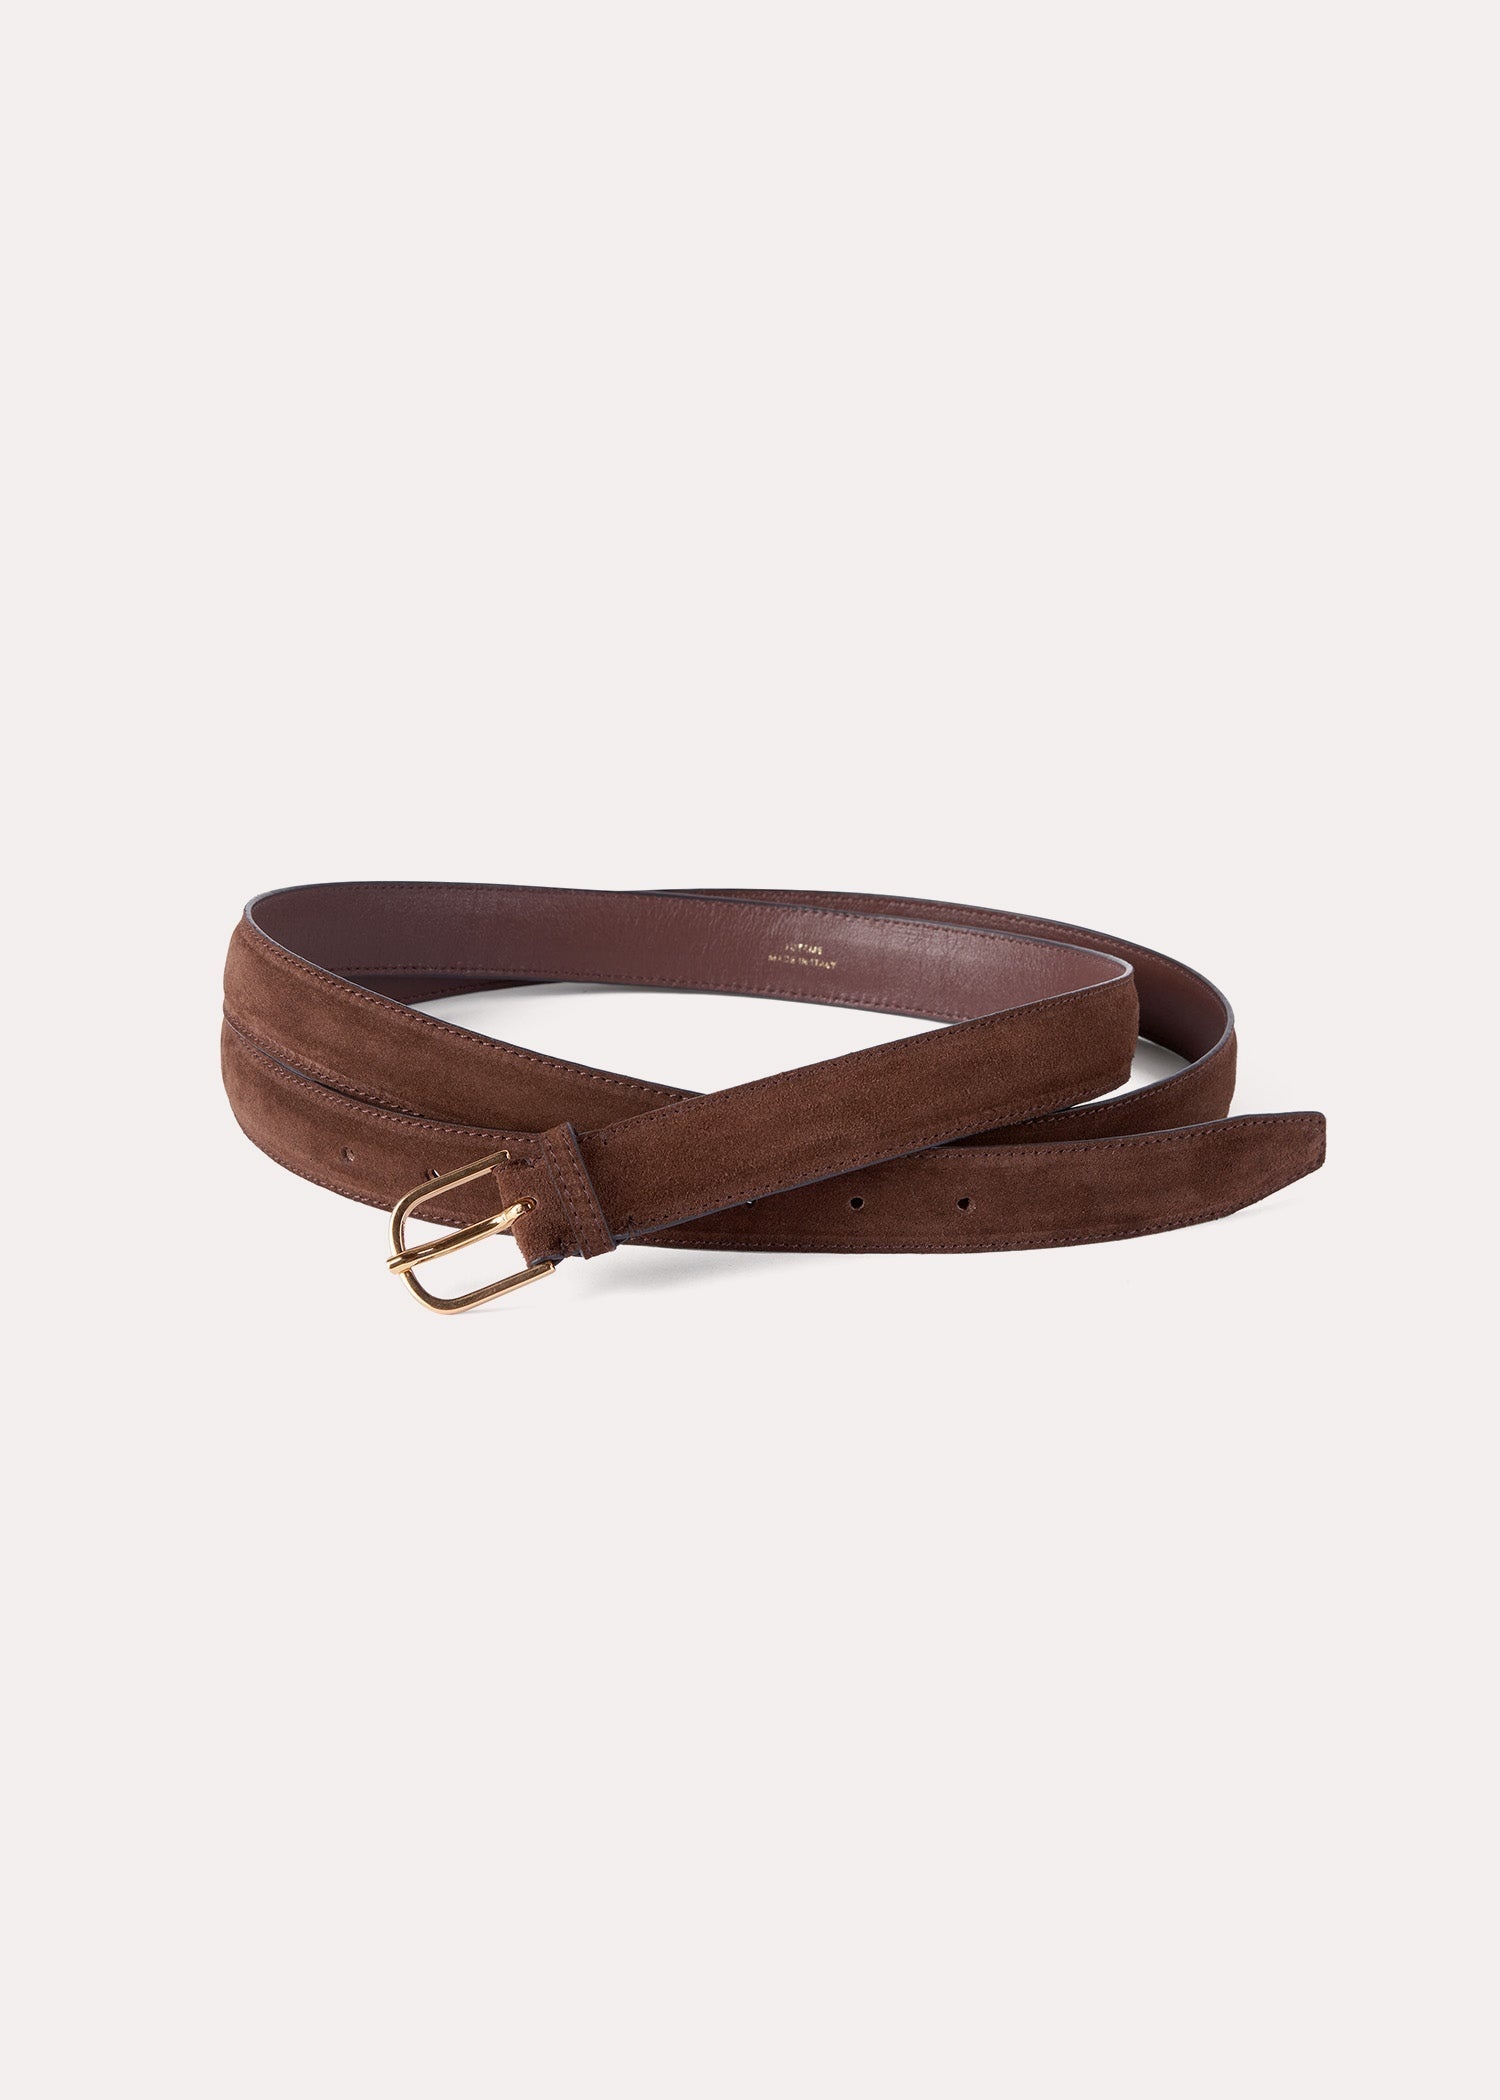 Wrap belt chocolate brown - 4